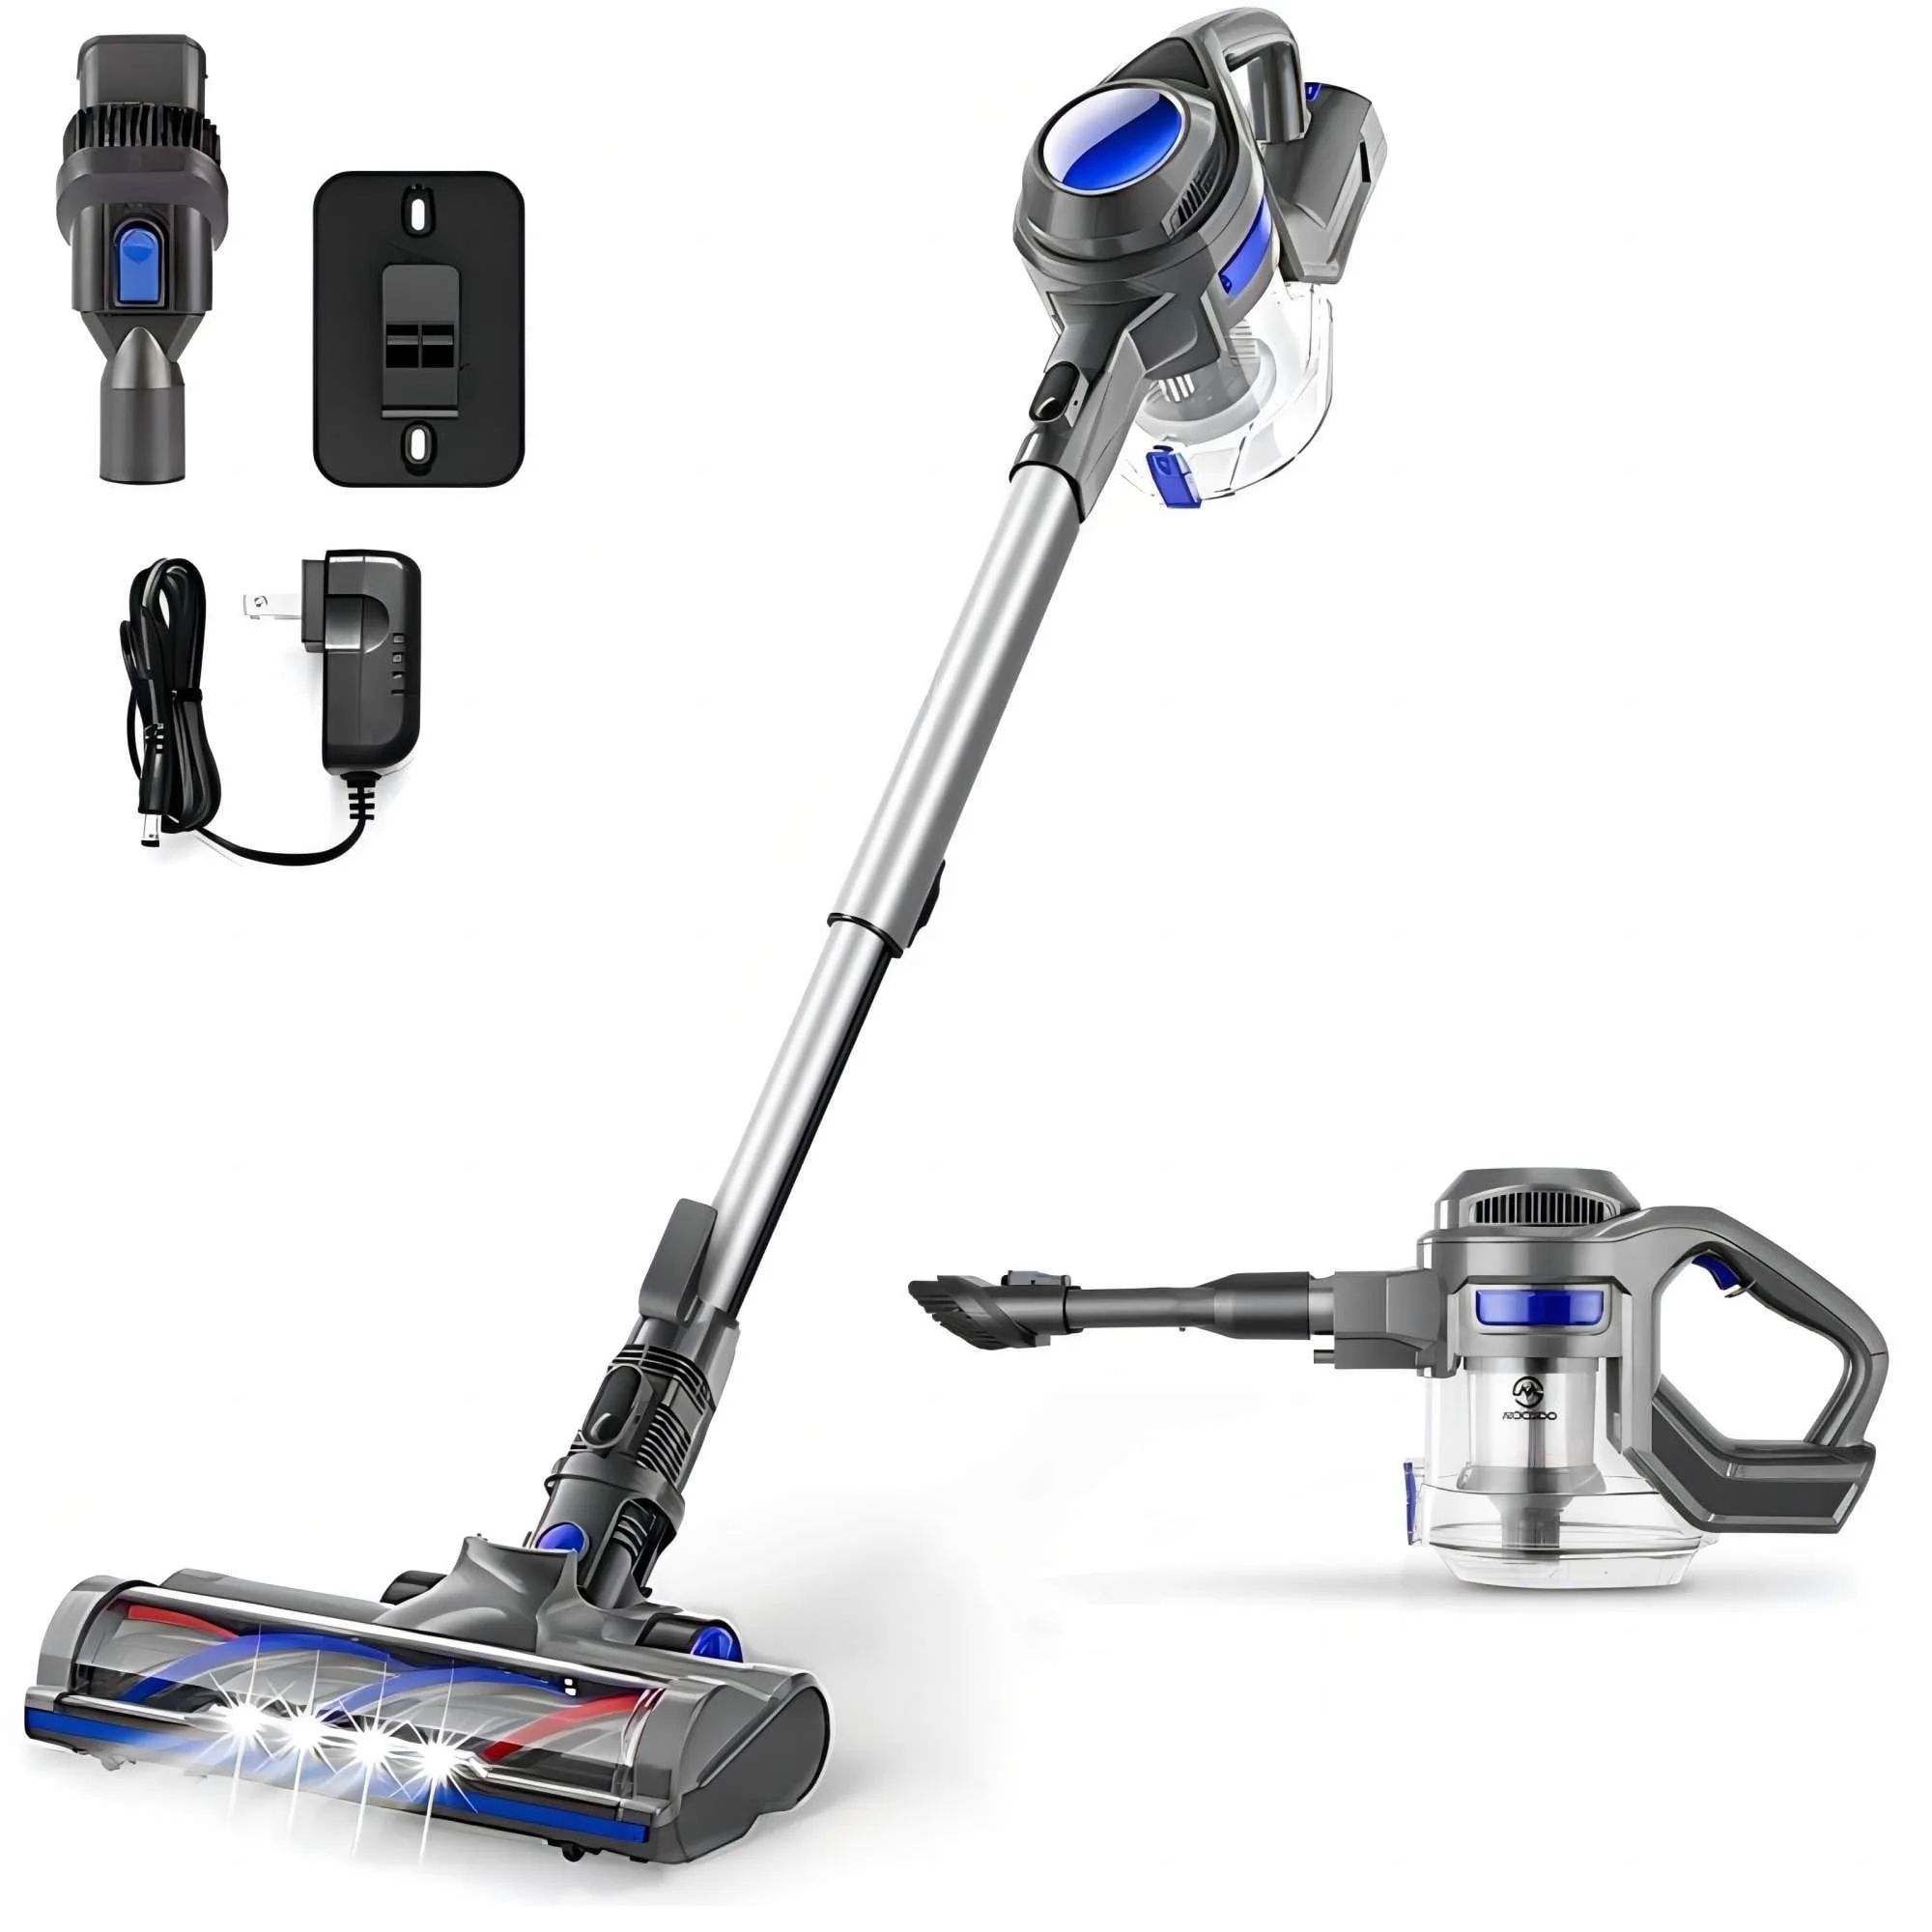 Moosoo Cordless Vacuum 4-in-1 Lightweight Stick Vacuum Cleaner, XL-618A | Walmart (US)